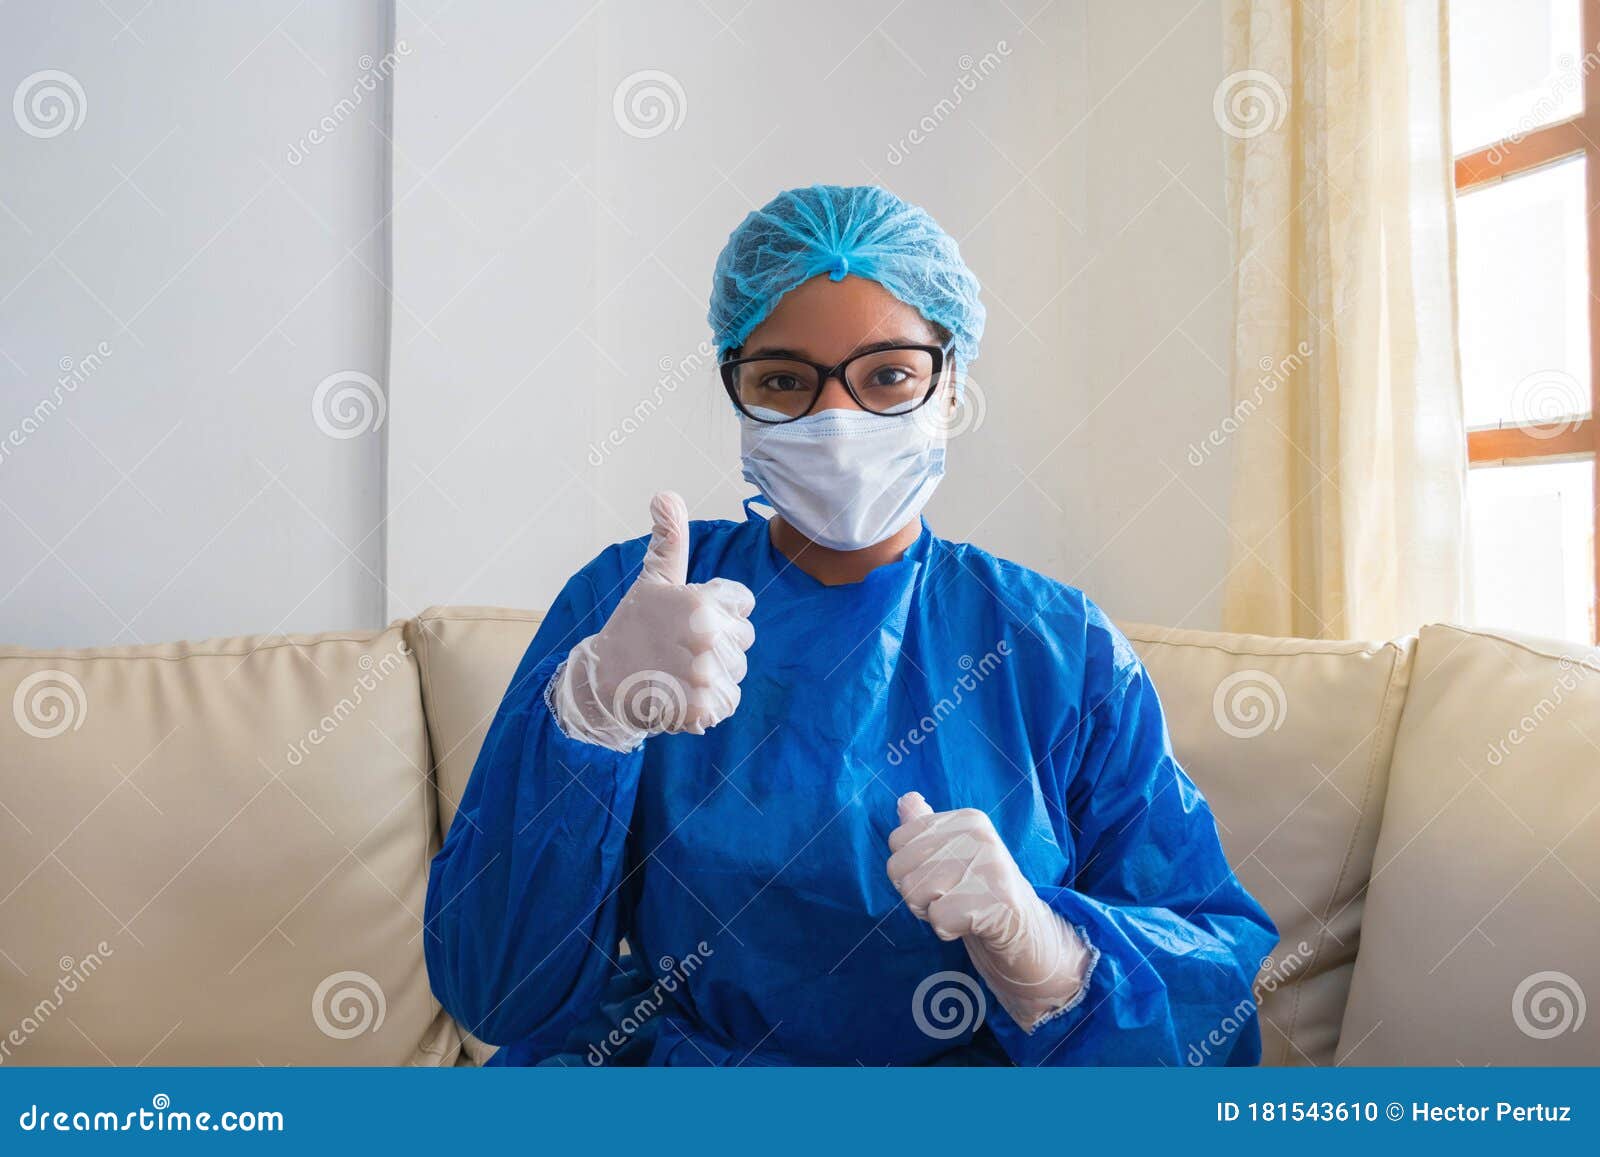 Portrait Of Nurse Pushing Empty Stretcher Royalty-Free Stock Image